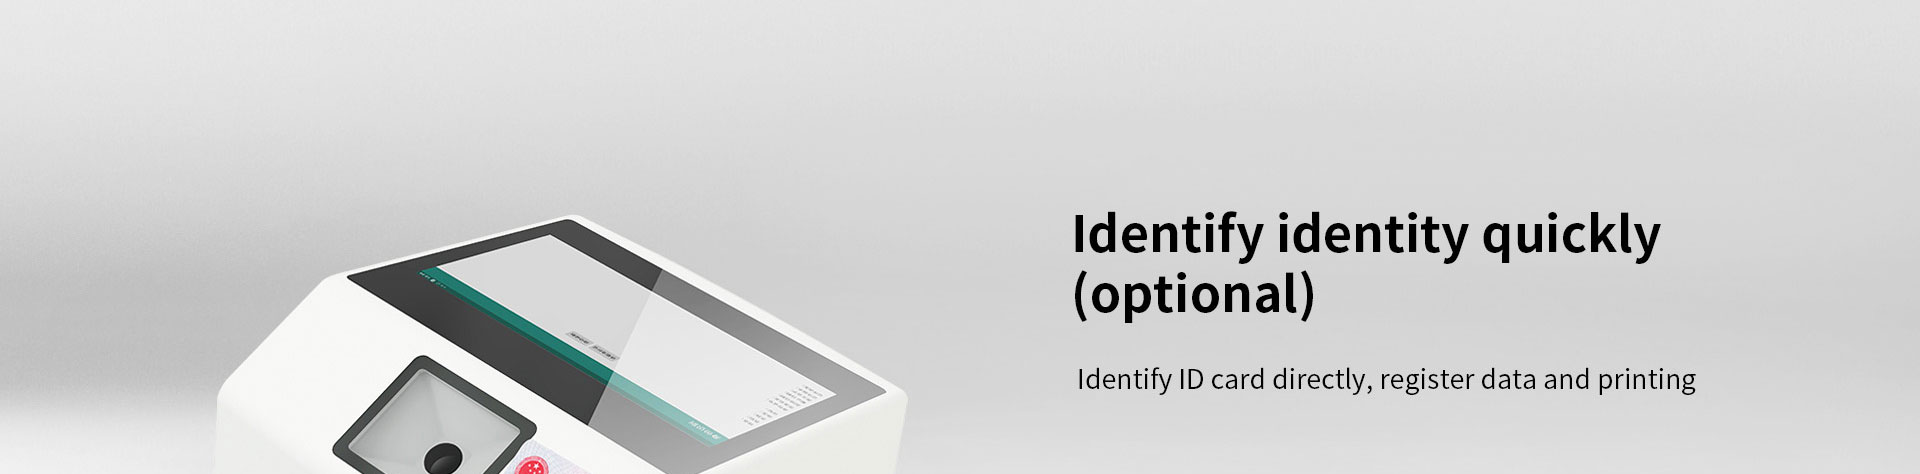 identify ID card printer